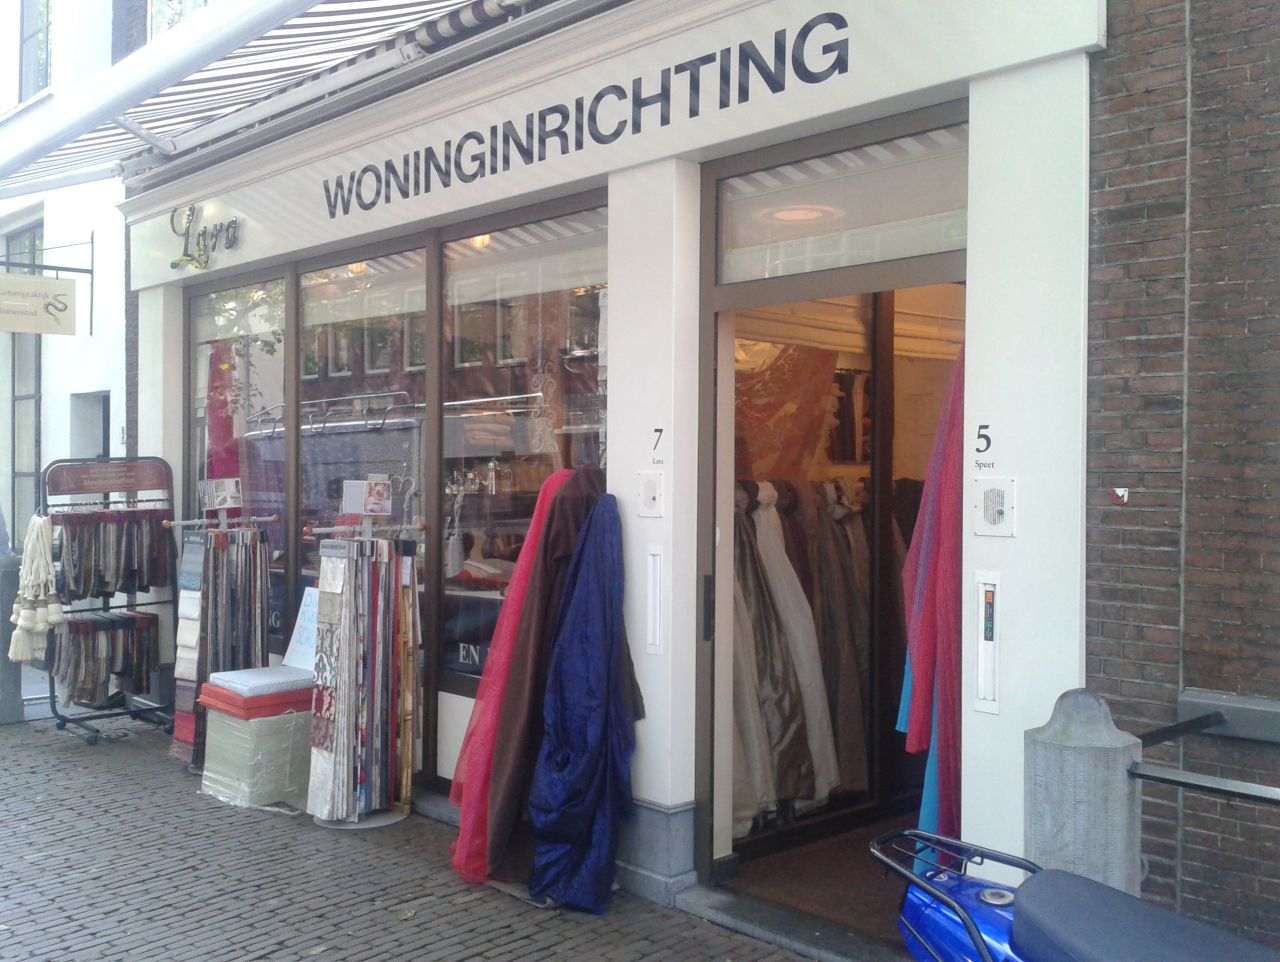 Interieur winkel Casa Wonen Utrecht in - woninginrichtingen.nu